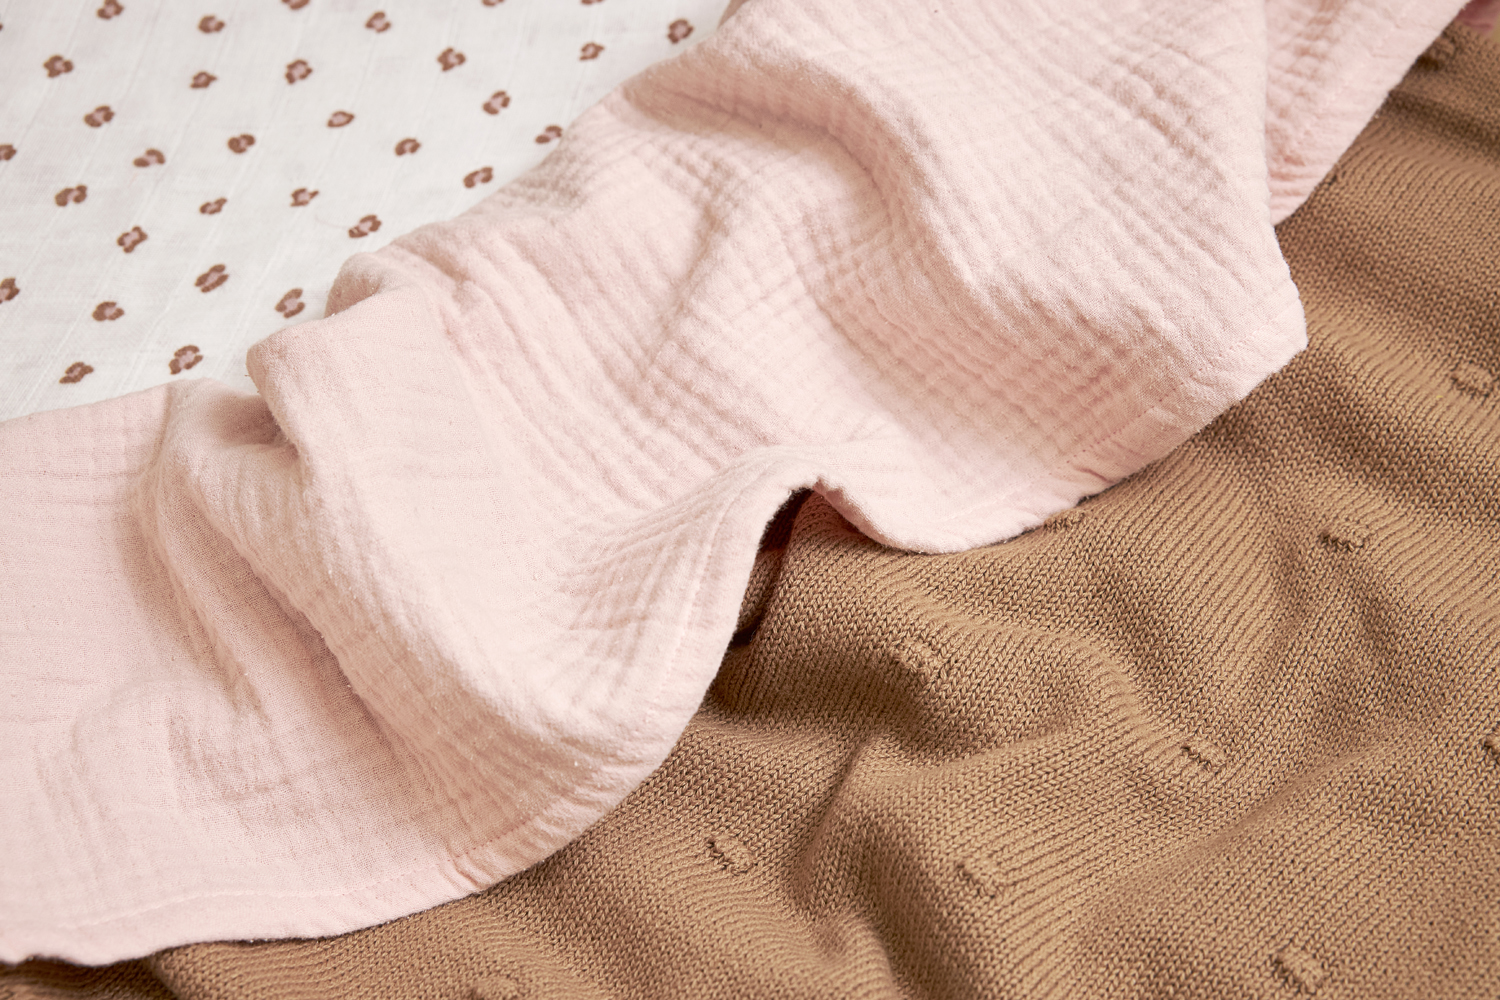 Crib sheet pre-washed muslin Uni - soft pink - 75X100cm